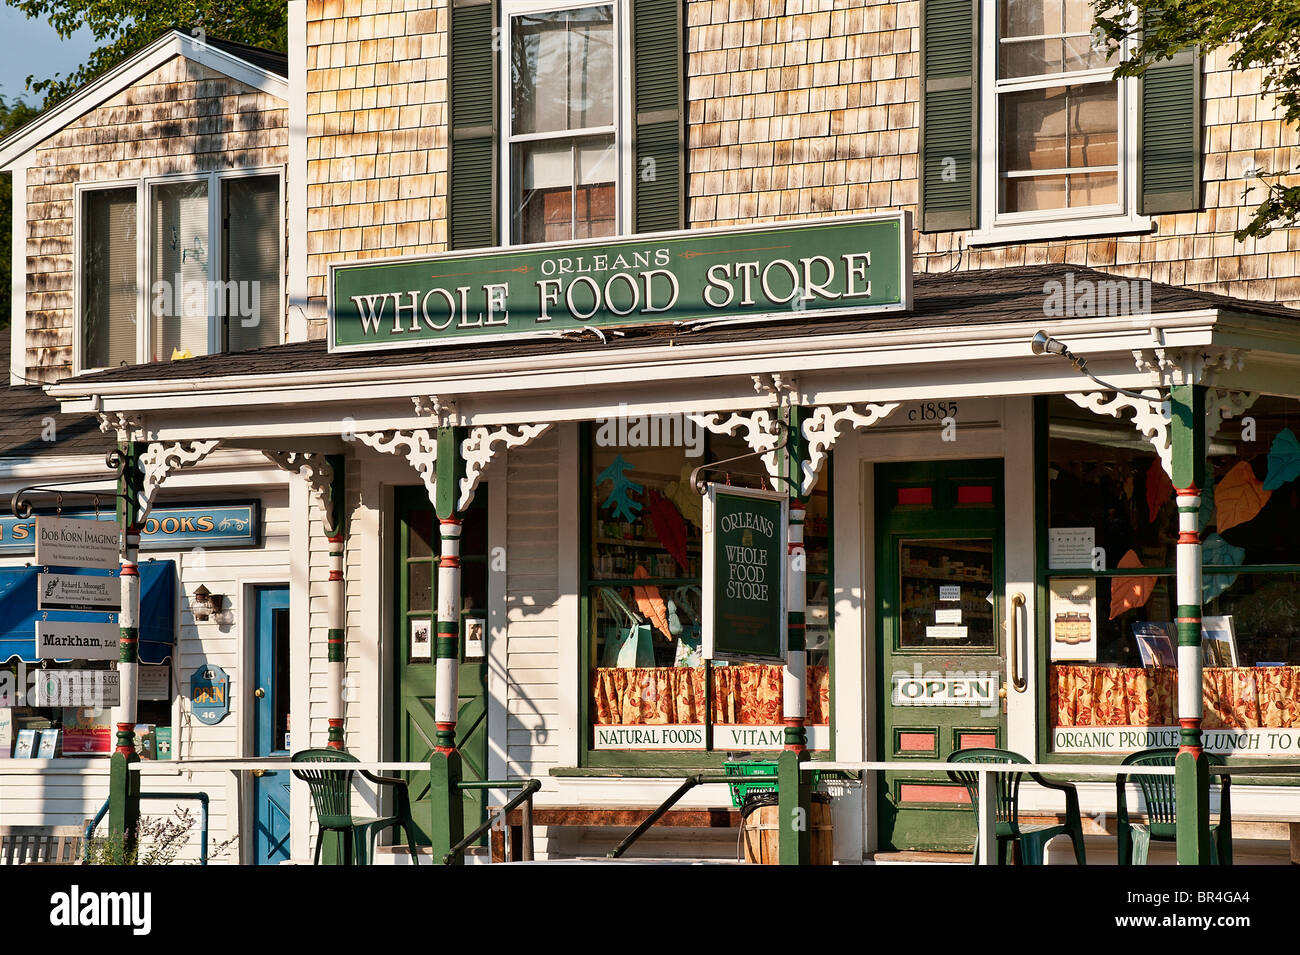 Whole Foods Store, Orleans, Cape Cod, Massachusetts, USA Stockfoto